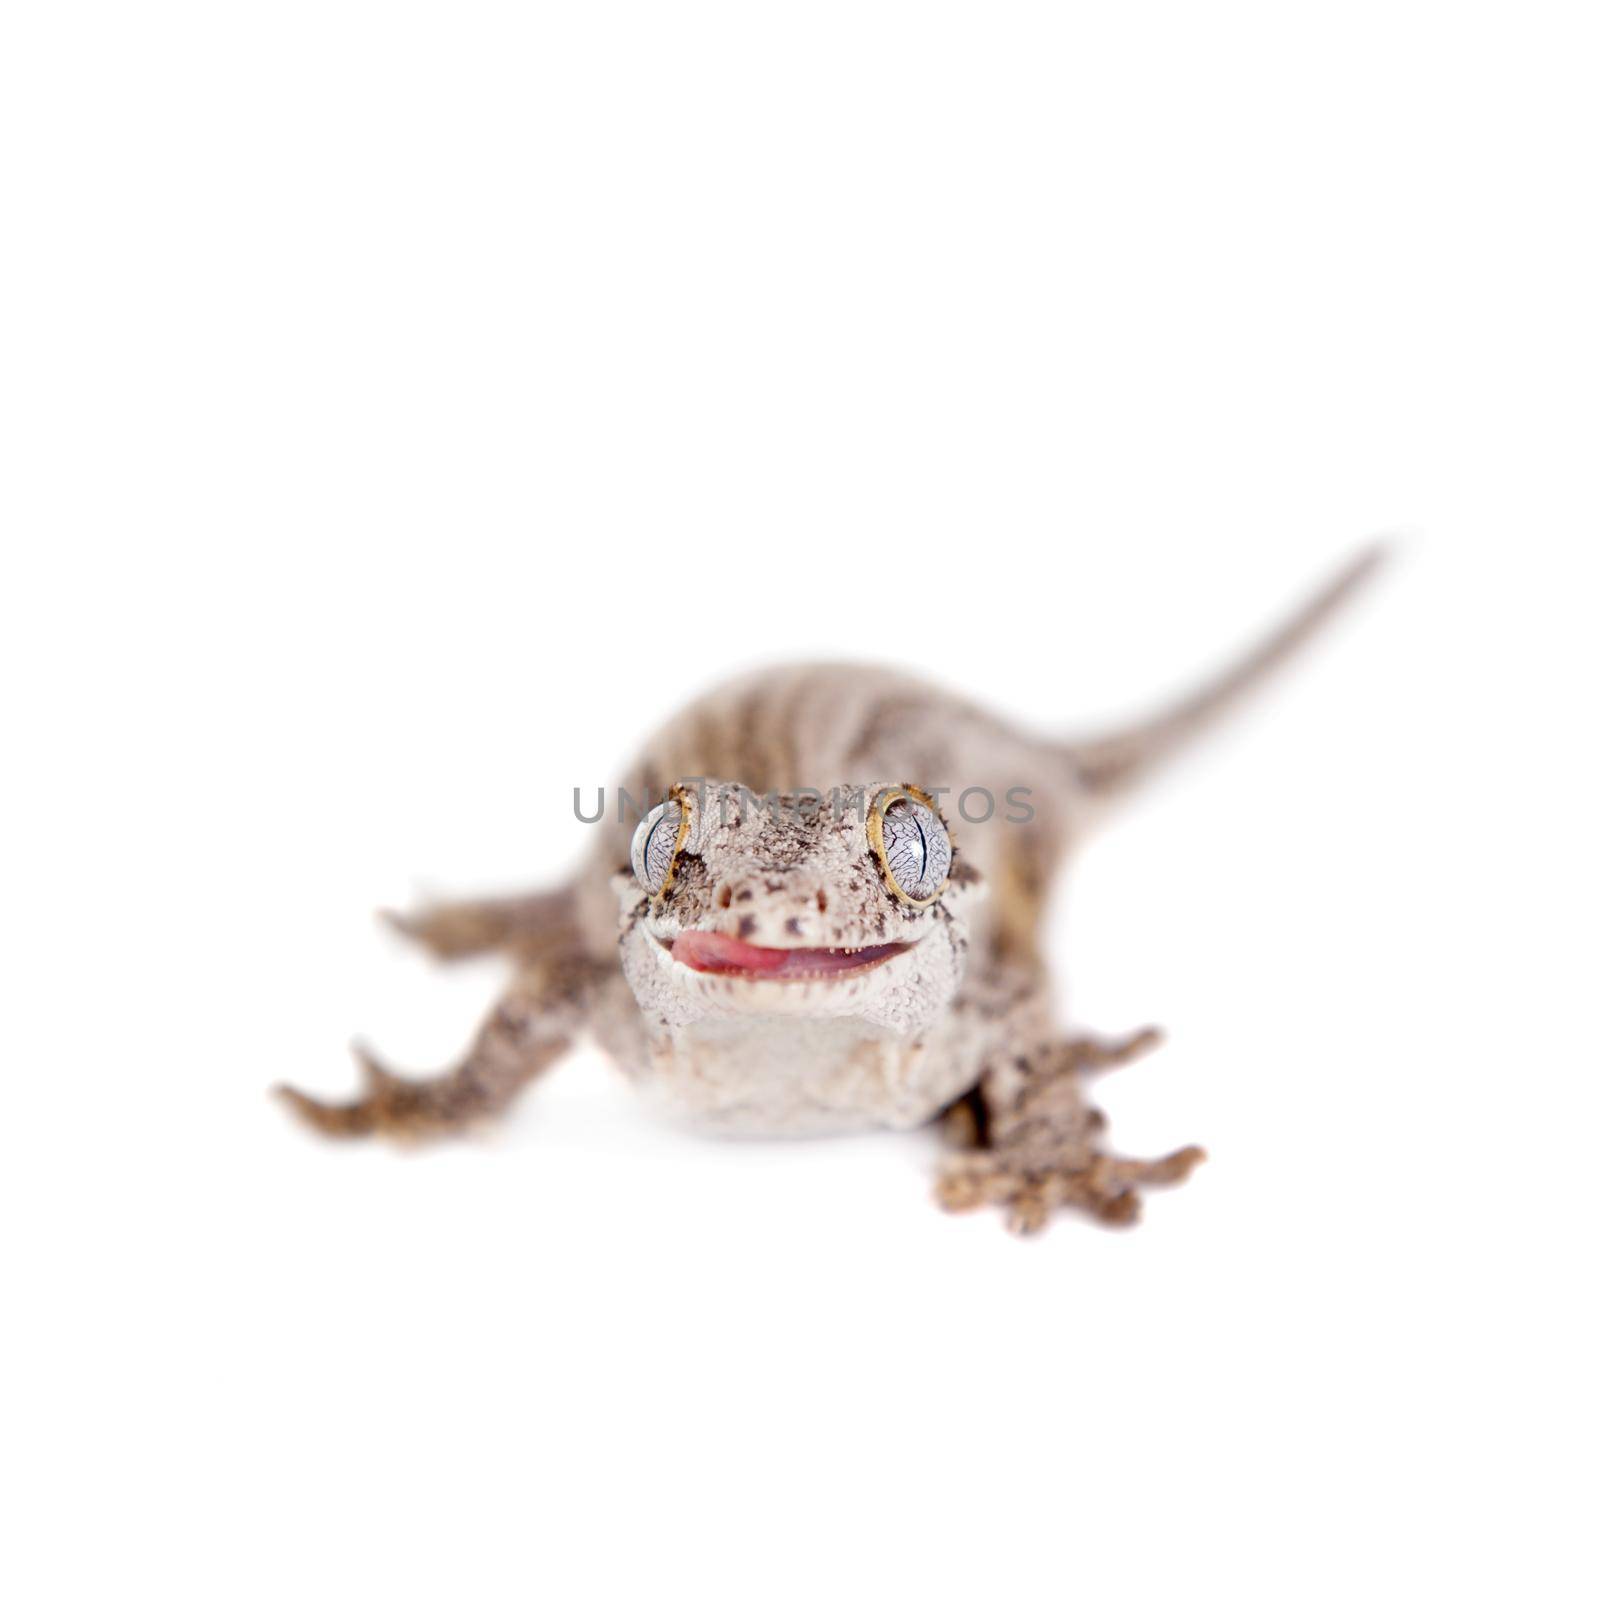 The gargoyle, New Caledonian bumpy gecko on white by RosaJay